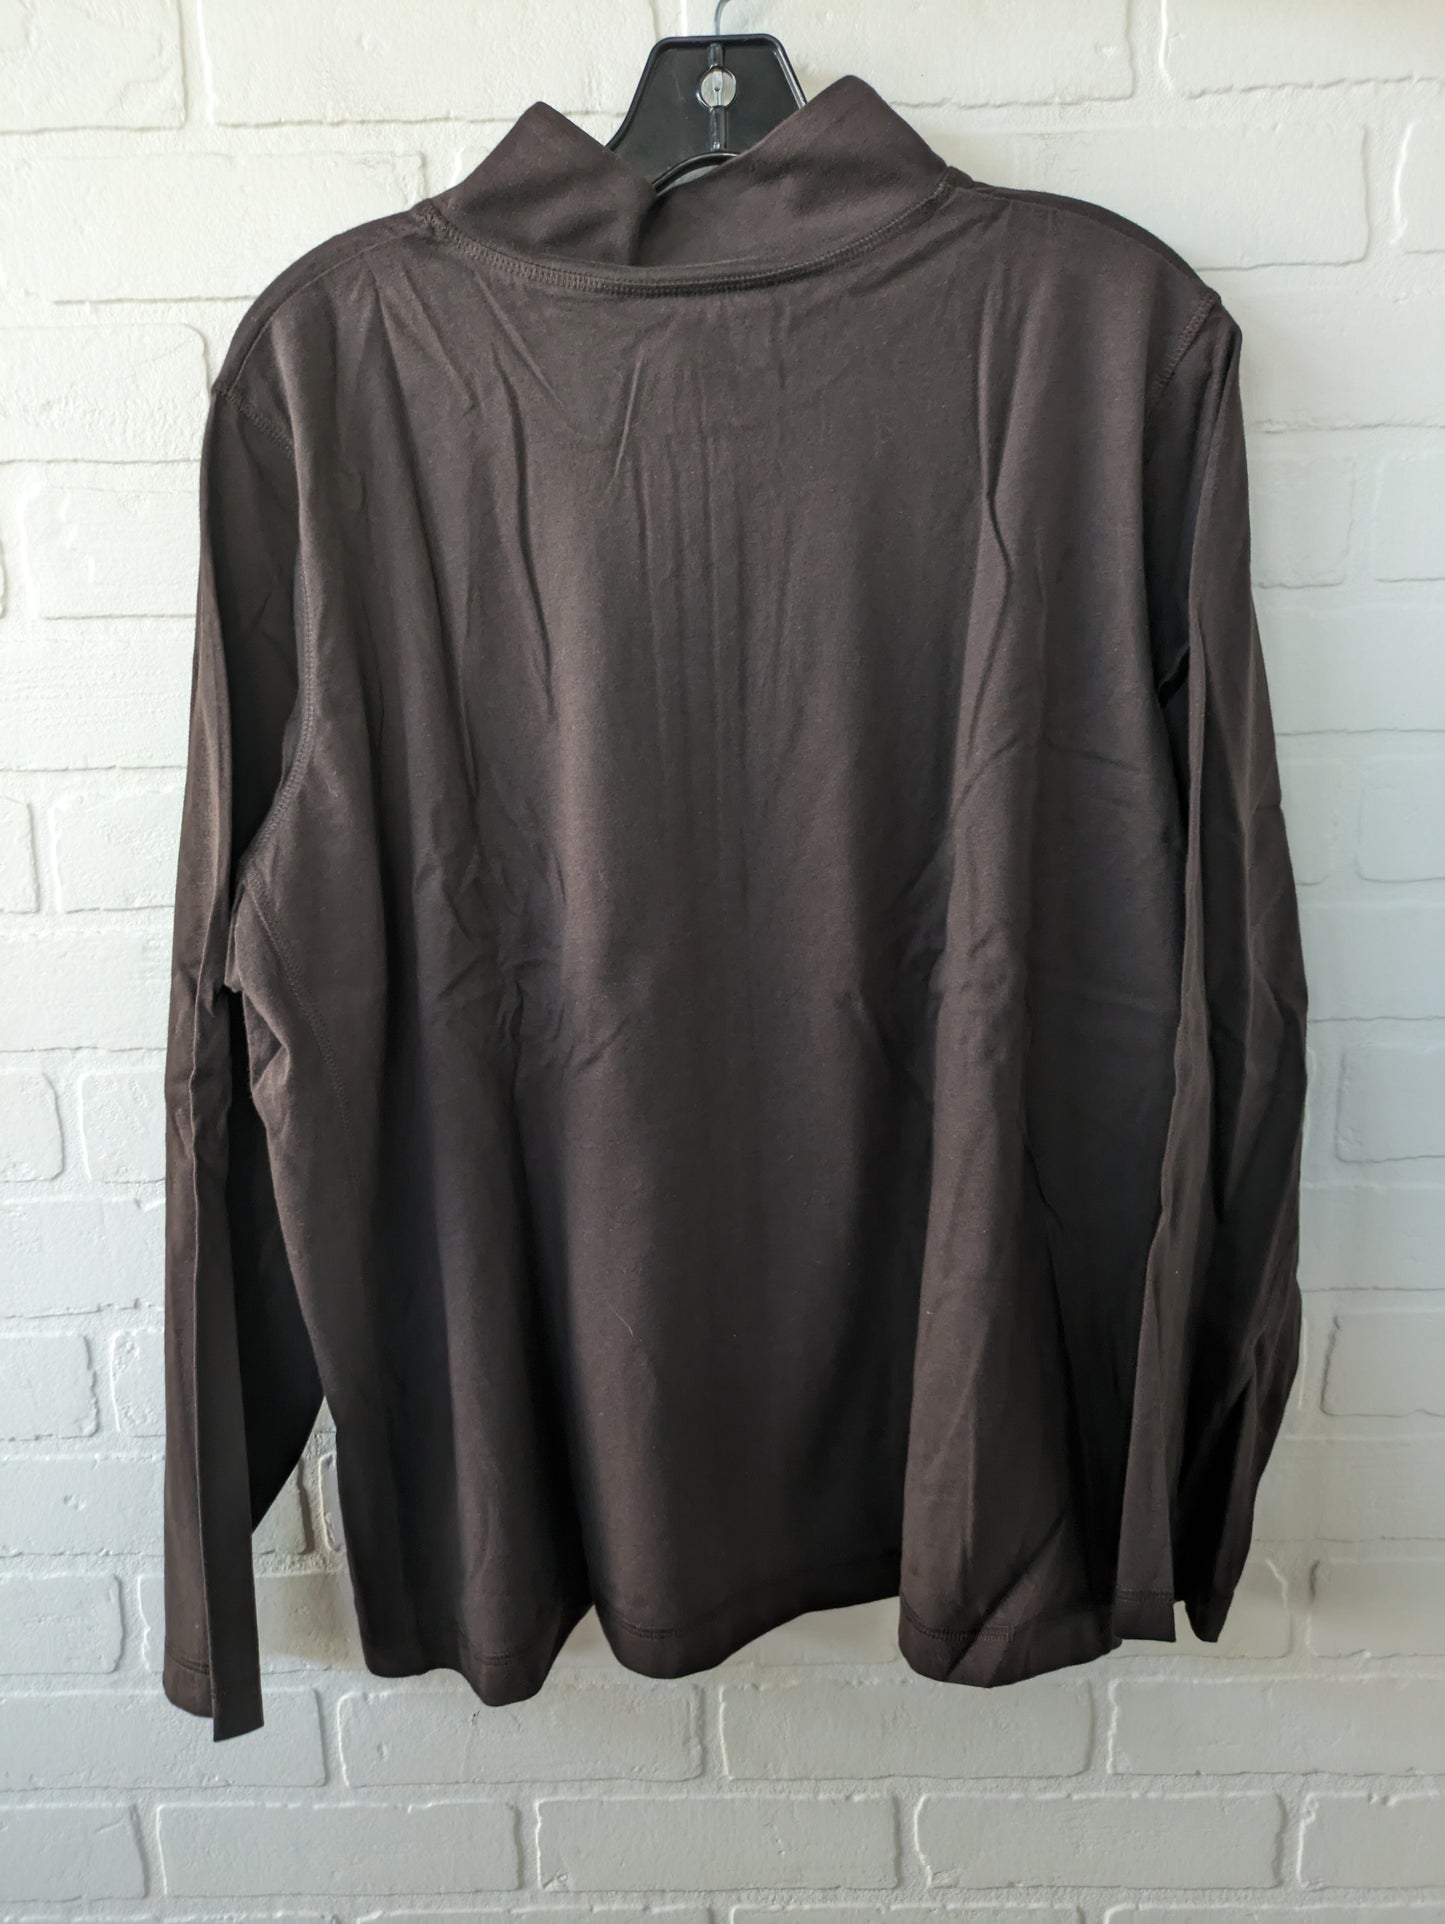 Sweatshirt Crewneck By Talbots  Size: 2x